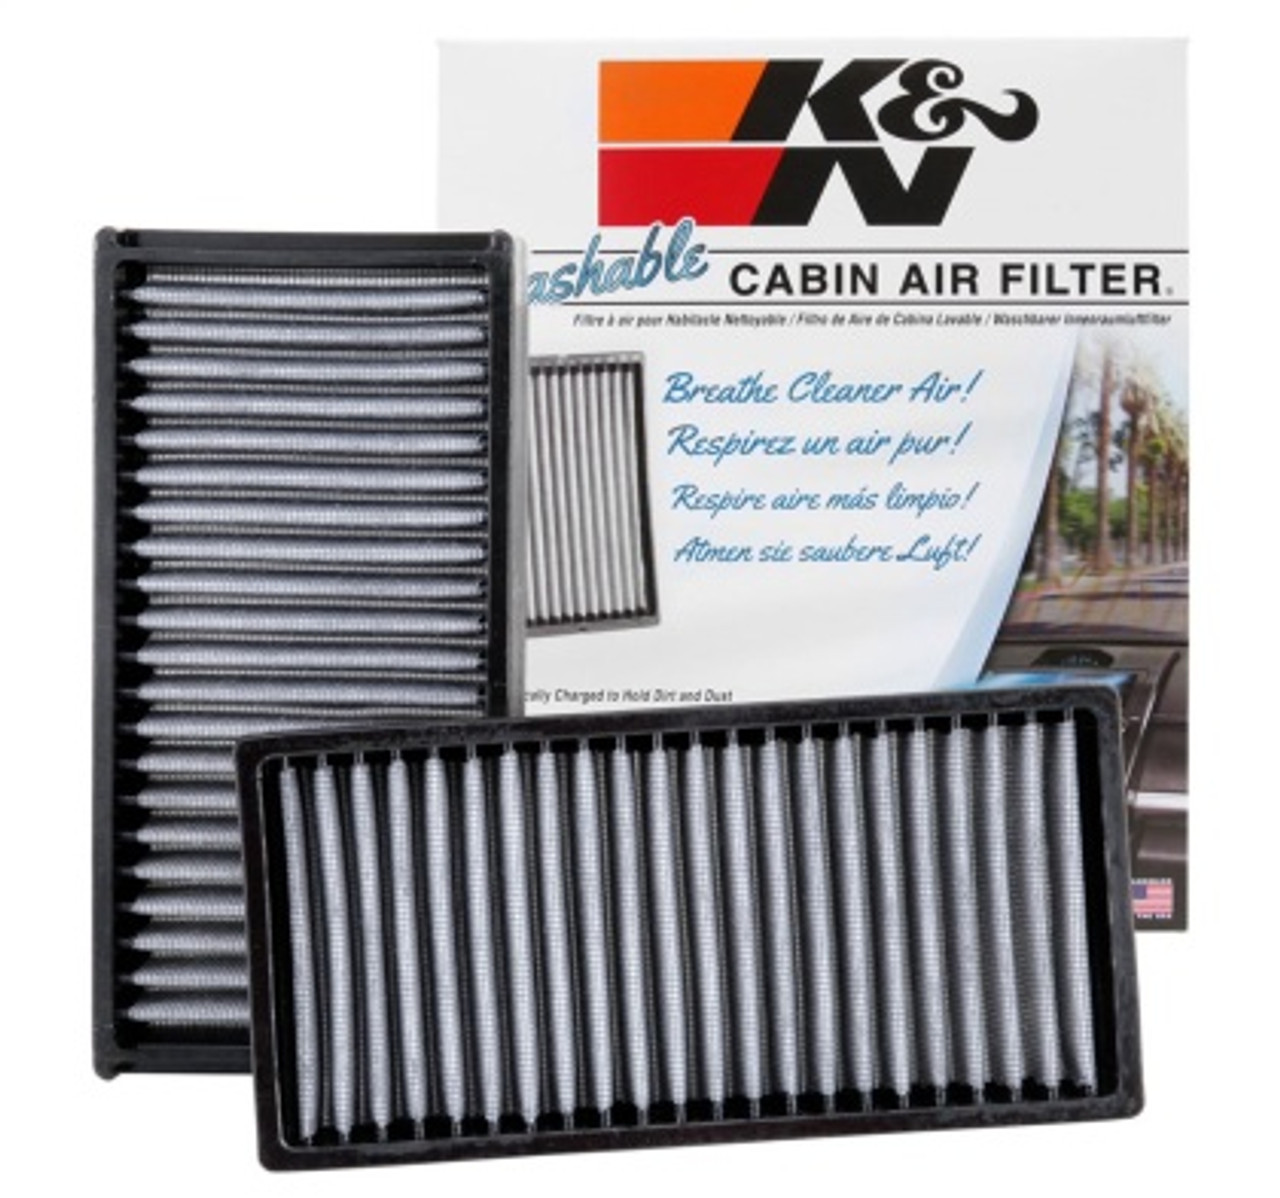 Cabin Air Filter